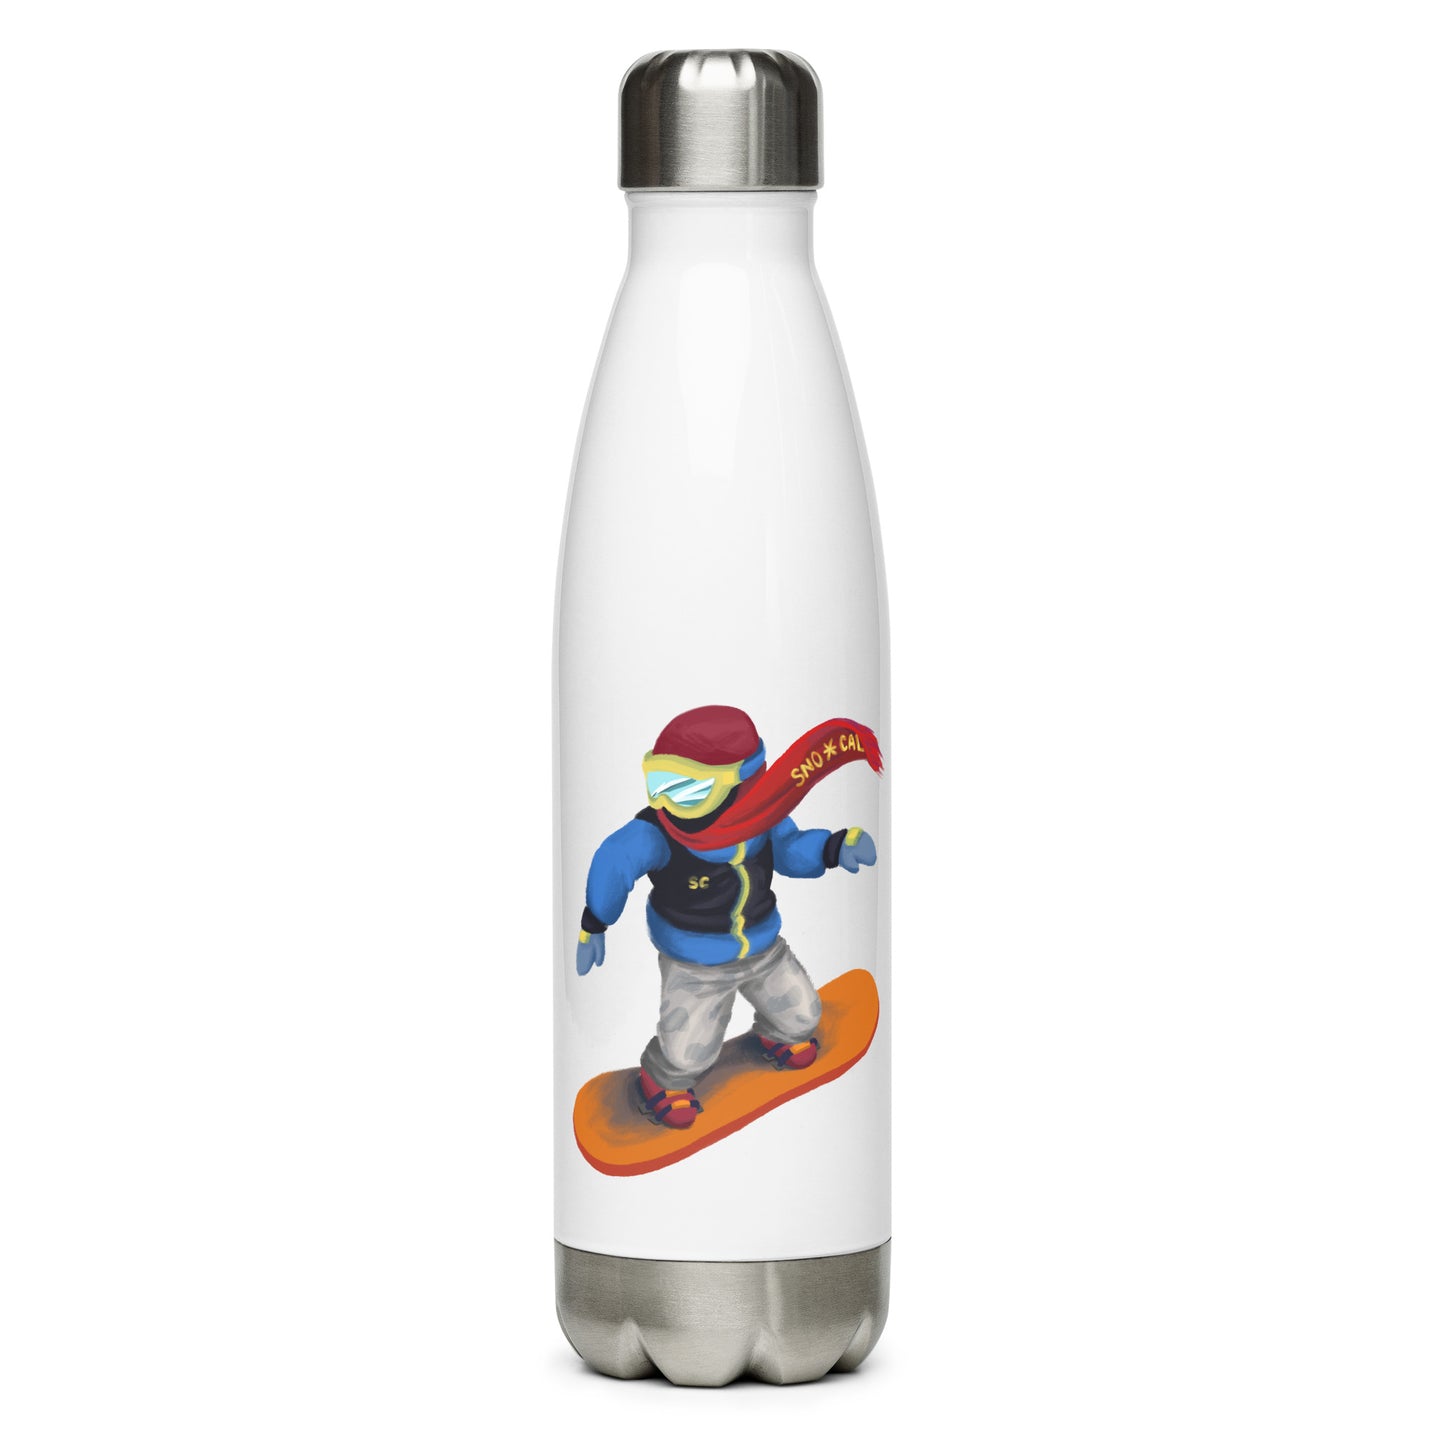 Snowboard emoji Stainless Steel Water Bottle